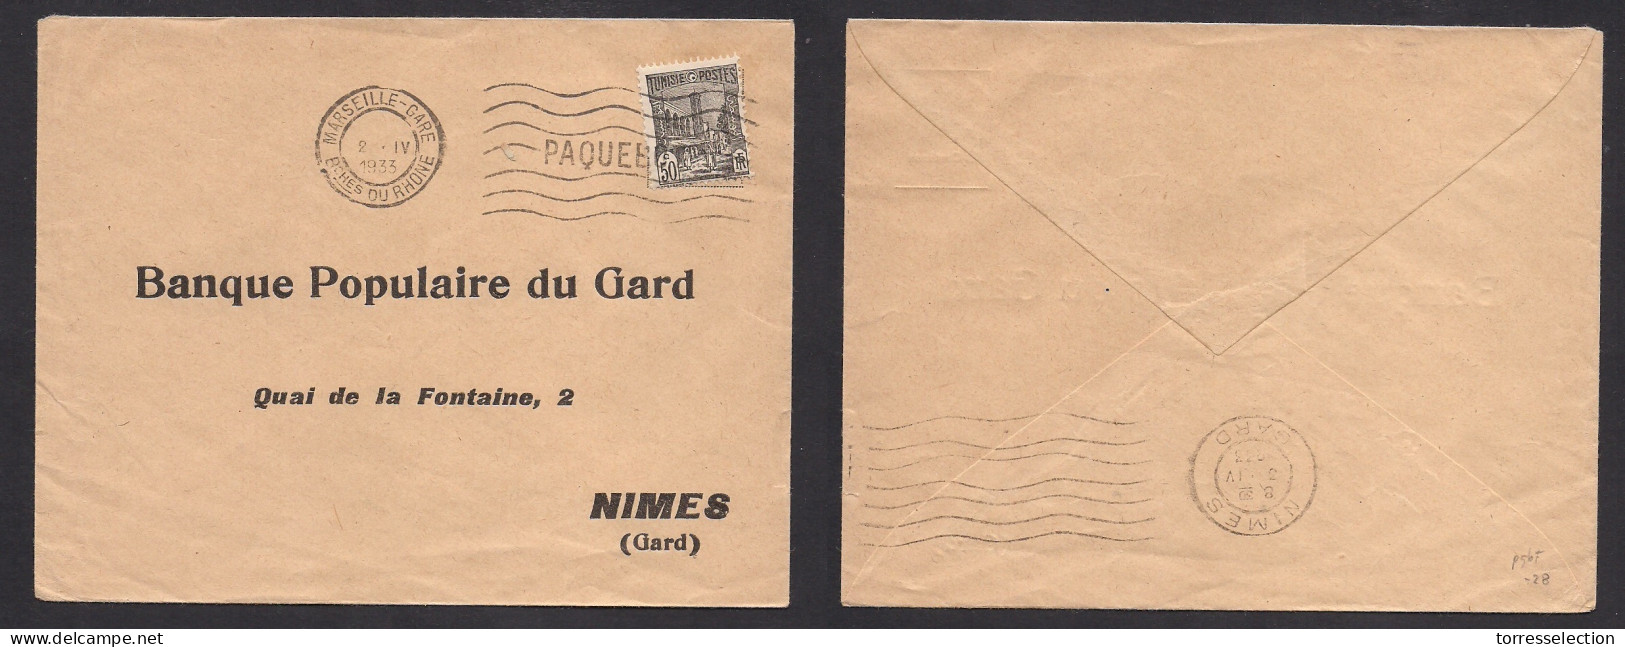 TUNISIA. 1933 (2 Apr) Pqbot Single 50c Fkd Env To France, Nimes (3 Apr) Via Marseille Rolling Pqbt Cachet. XSALE. - Tunesien (1956-...)